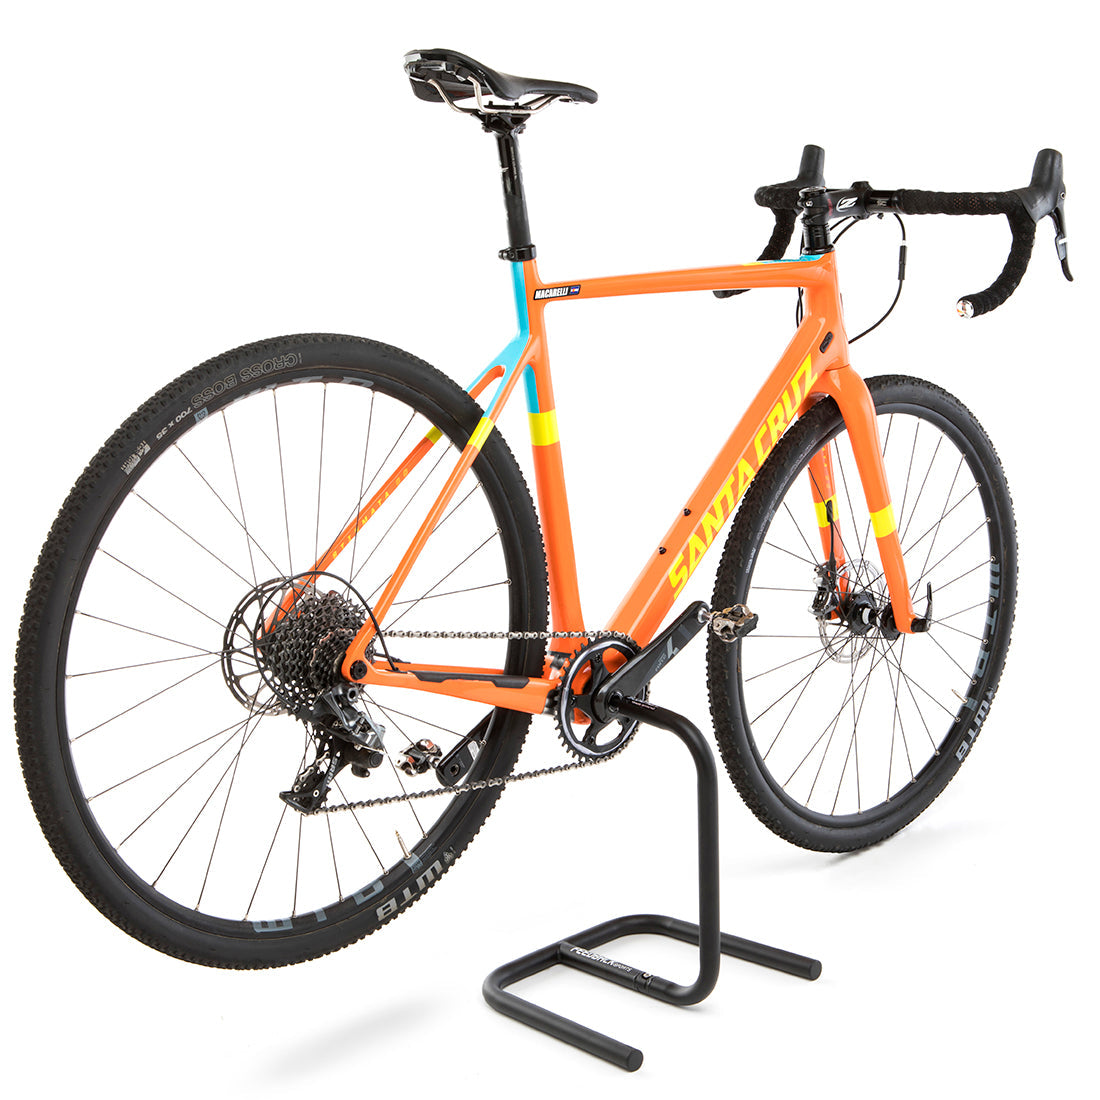 Orange cyclocross bike installed in Scorpion bike storage stand in studio.